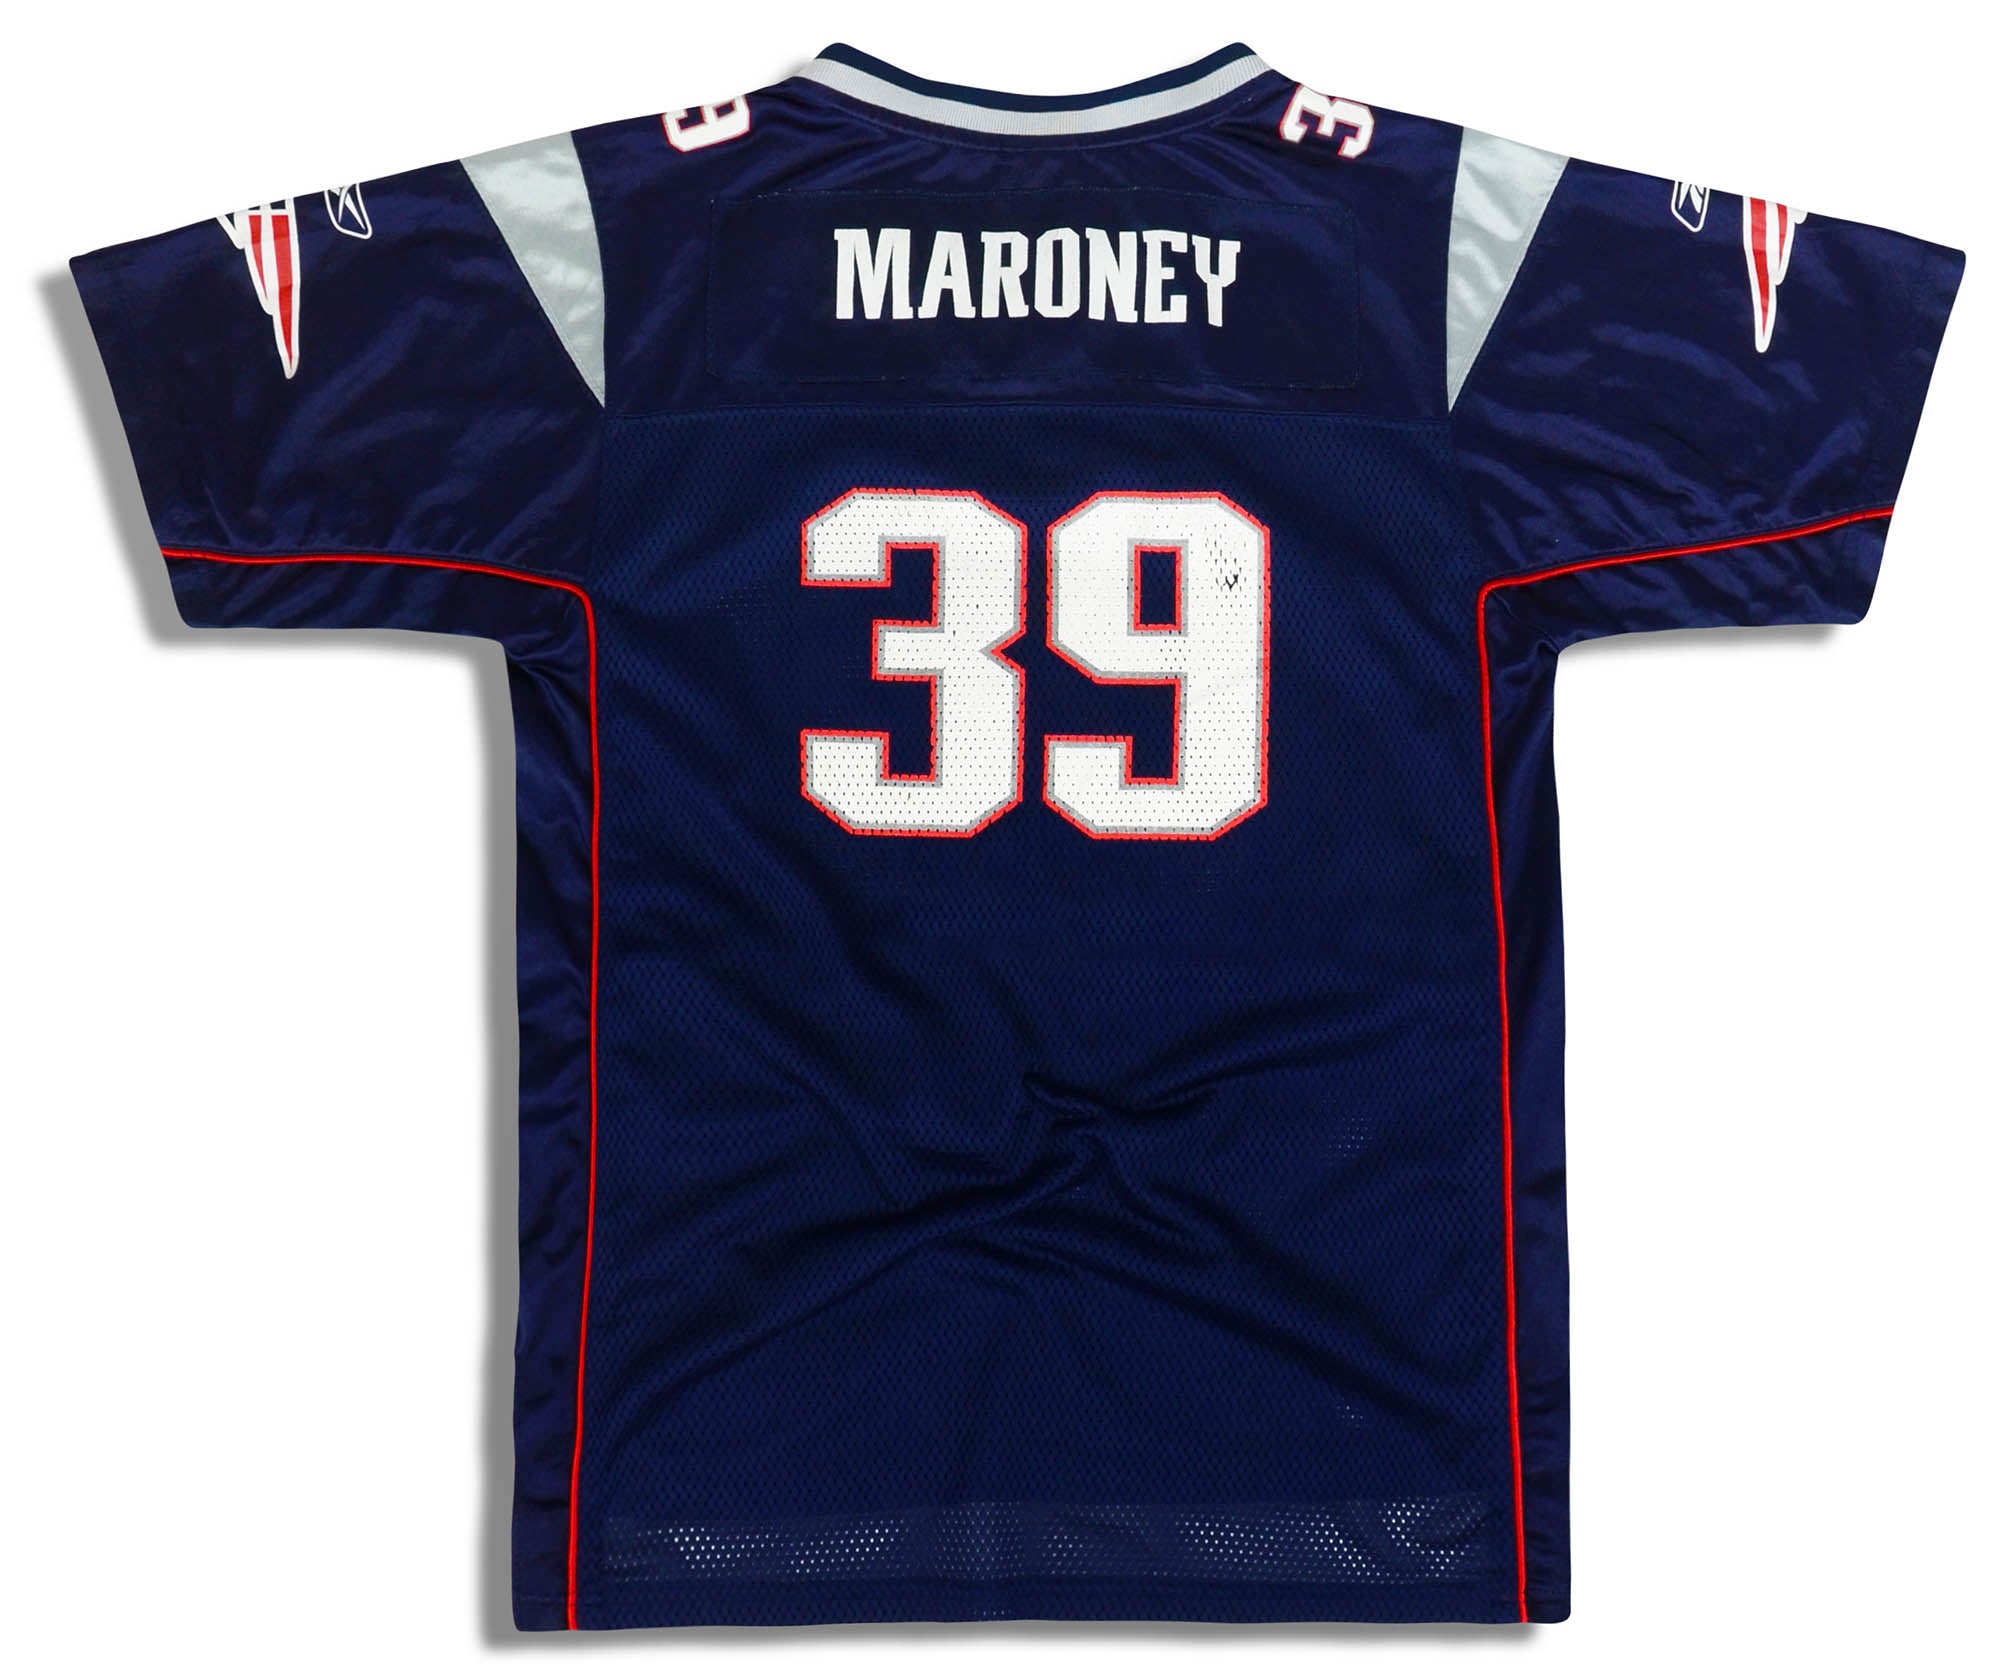 maroney patriots jersey